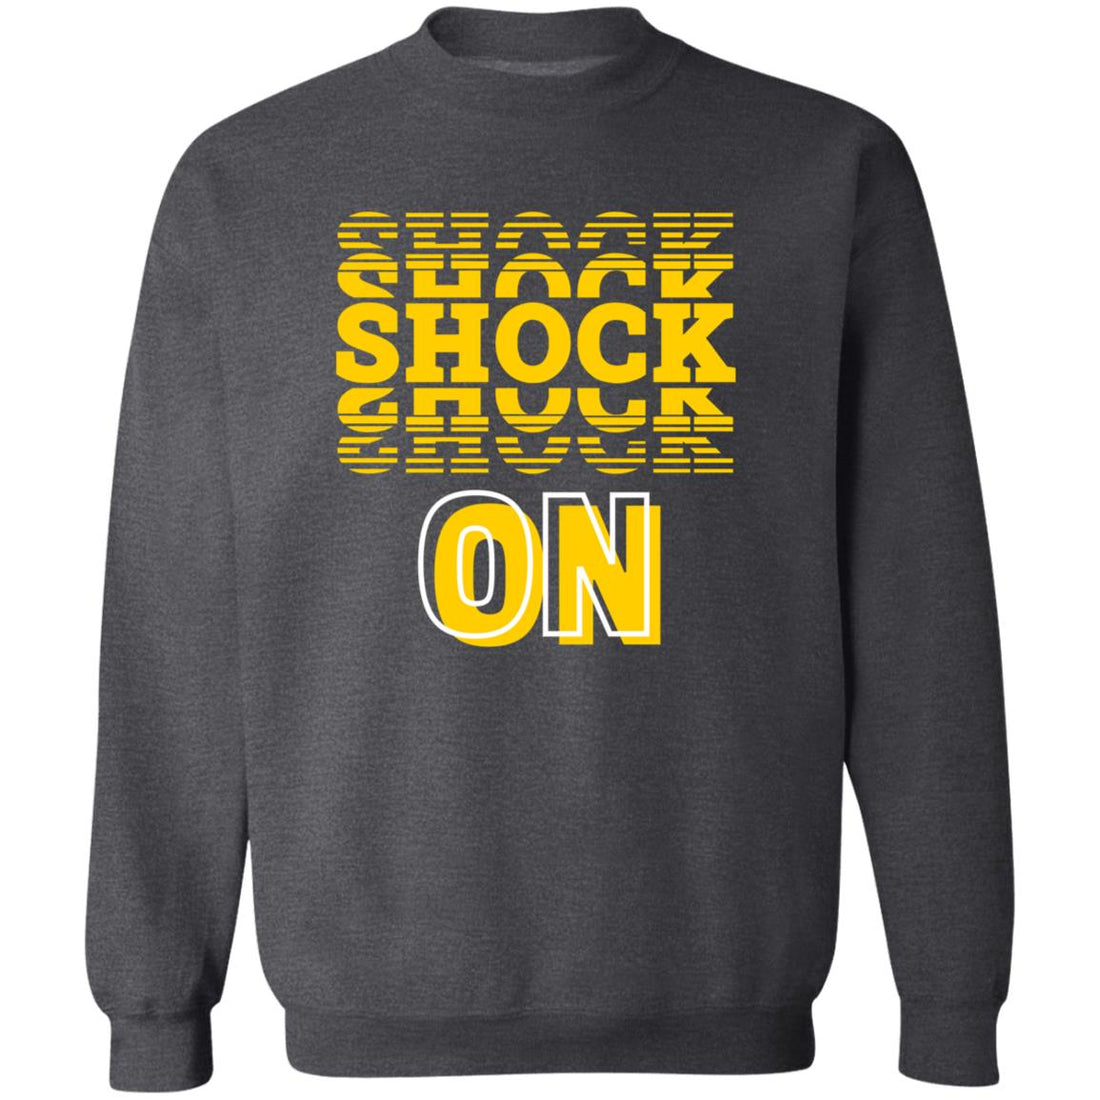 Shocked ON Crewneck Pullover Sweatshirt - Sweatshirts - Positively Sassy - Shocked ON Crewneck Pullover Sweatshirt